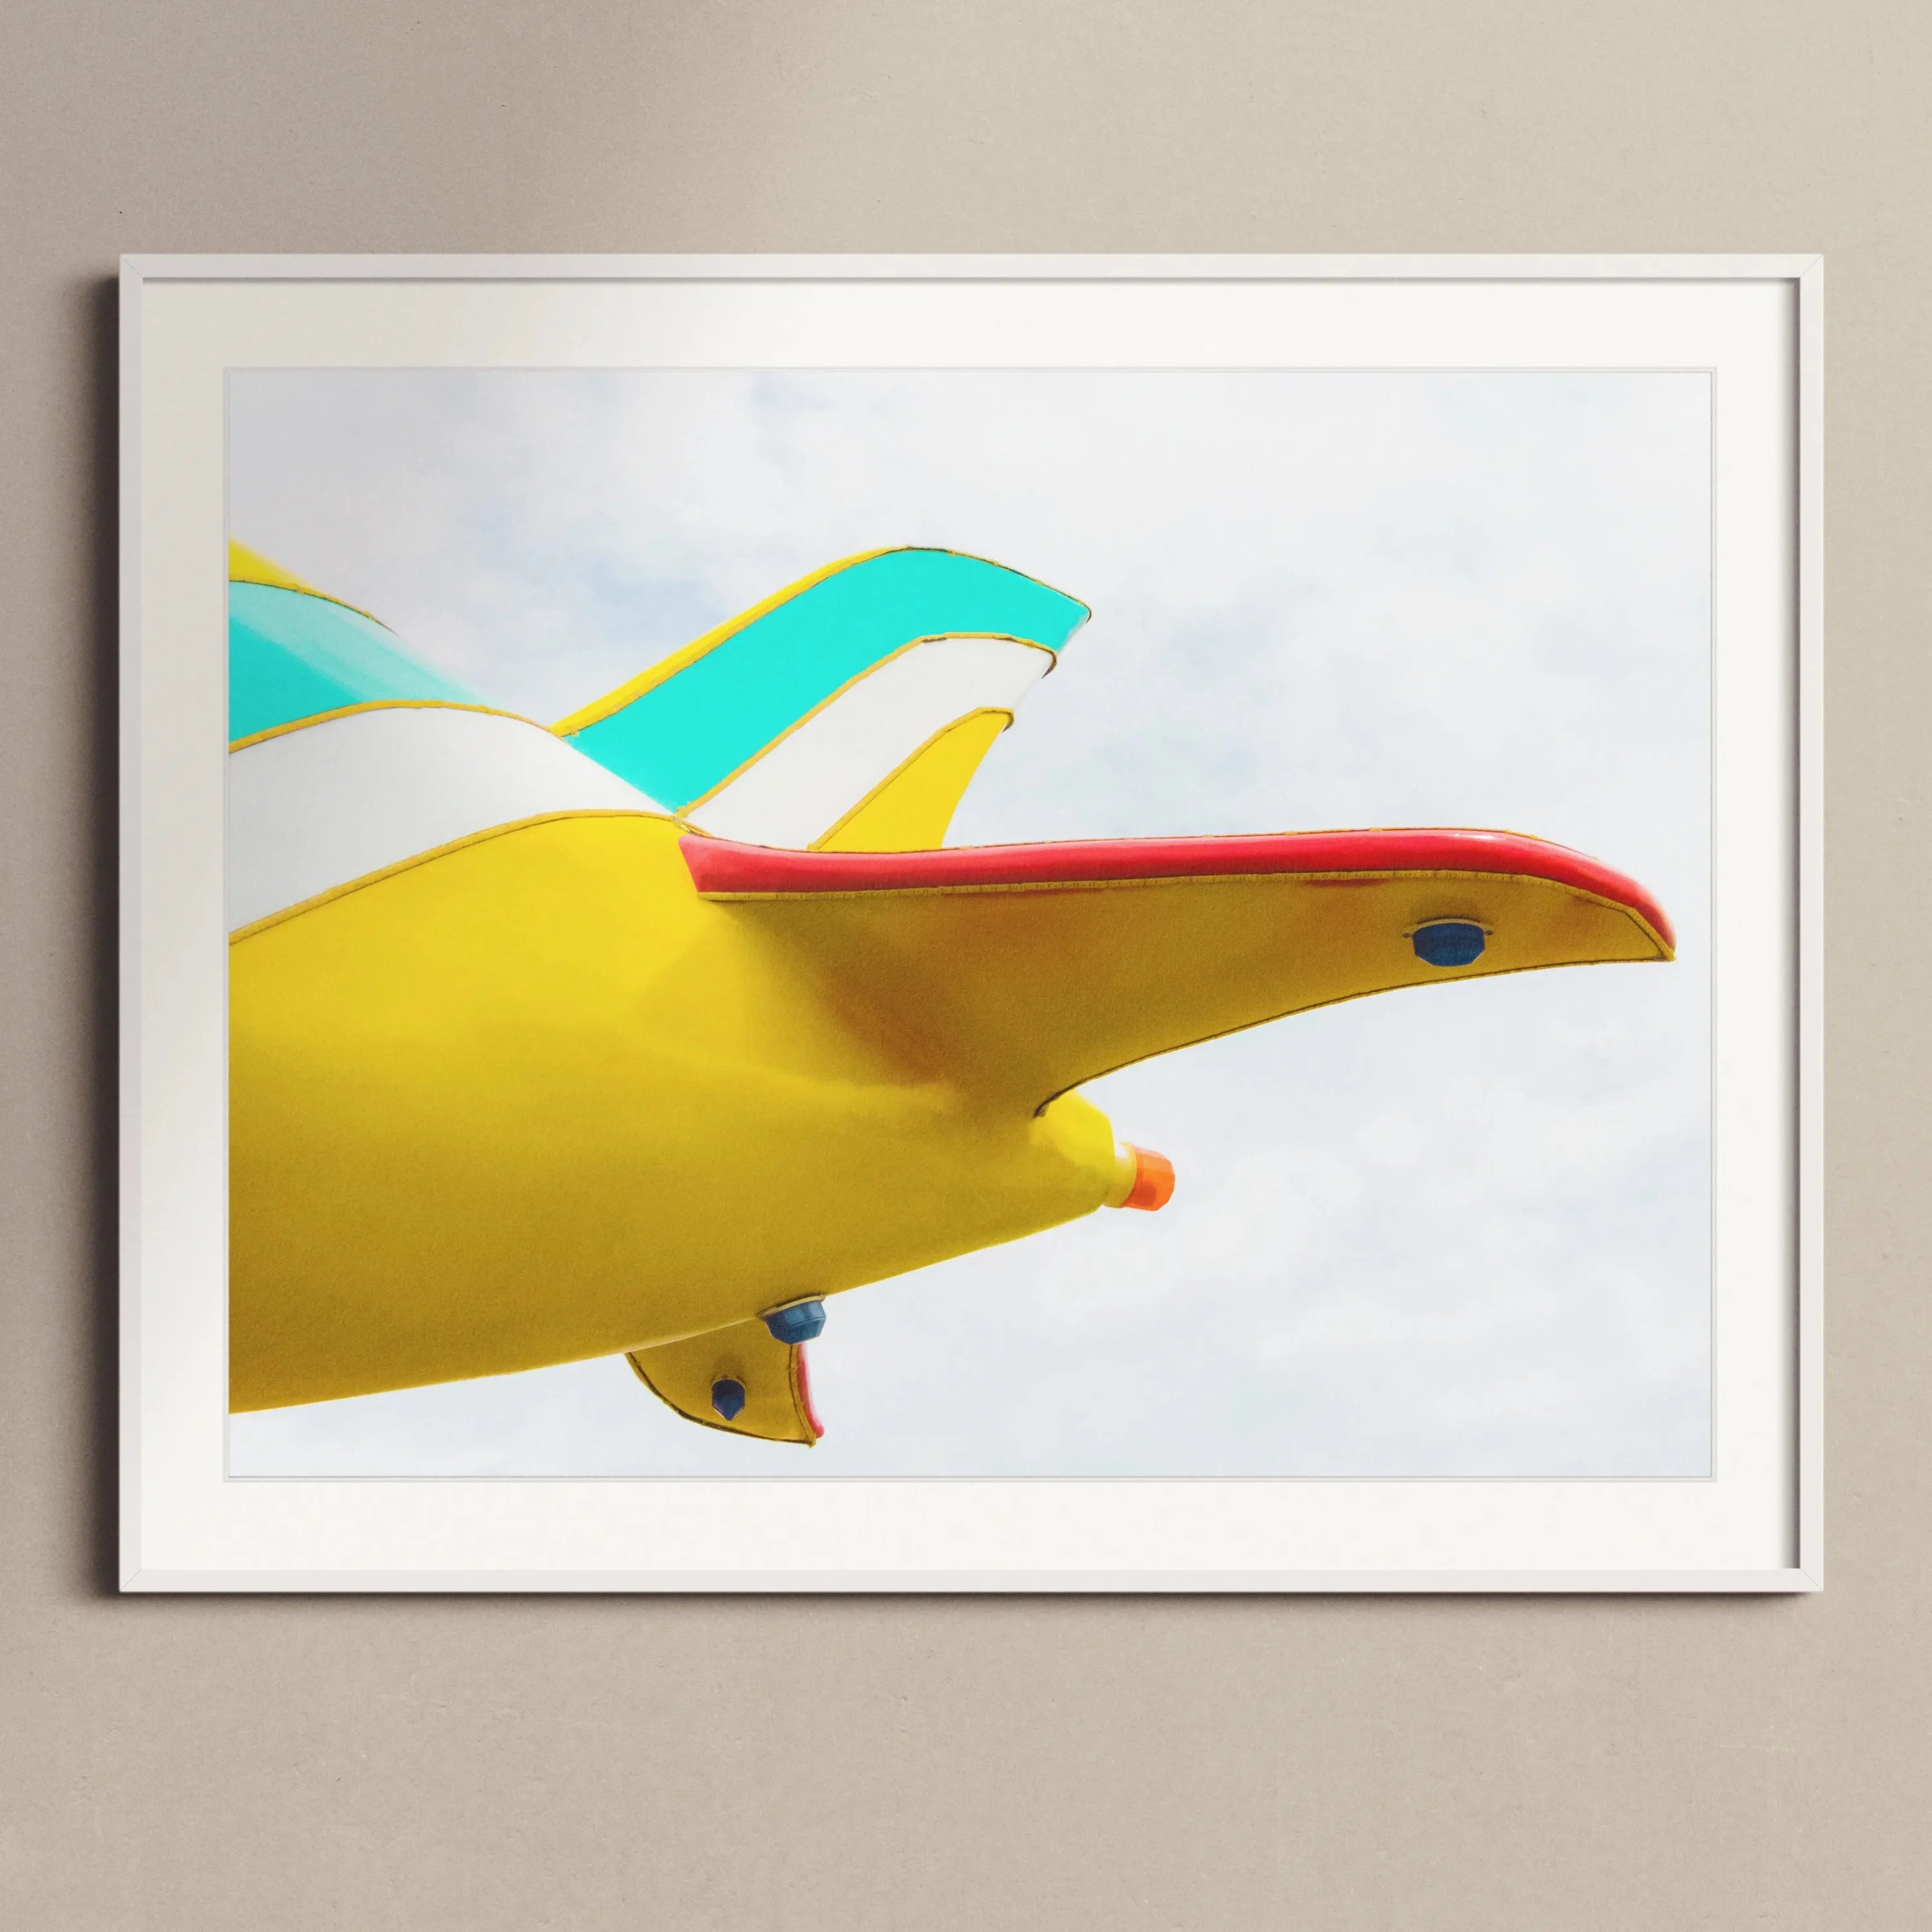 Flying High 2 Framed & Mounted Print - Posters Prints & Visual Artwork - Aesthetic Art